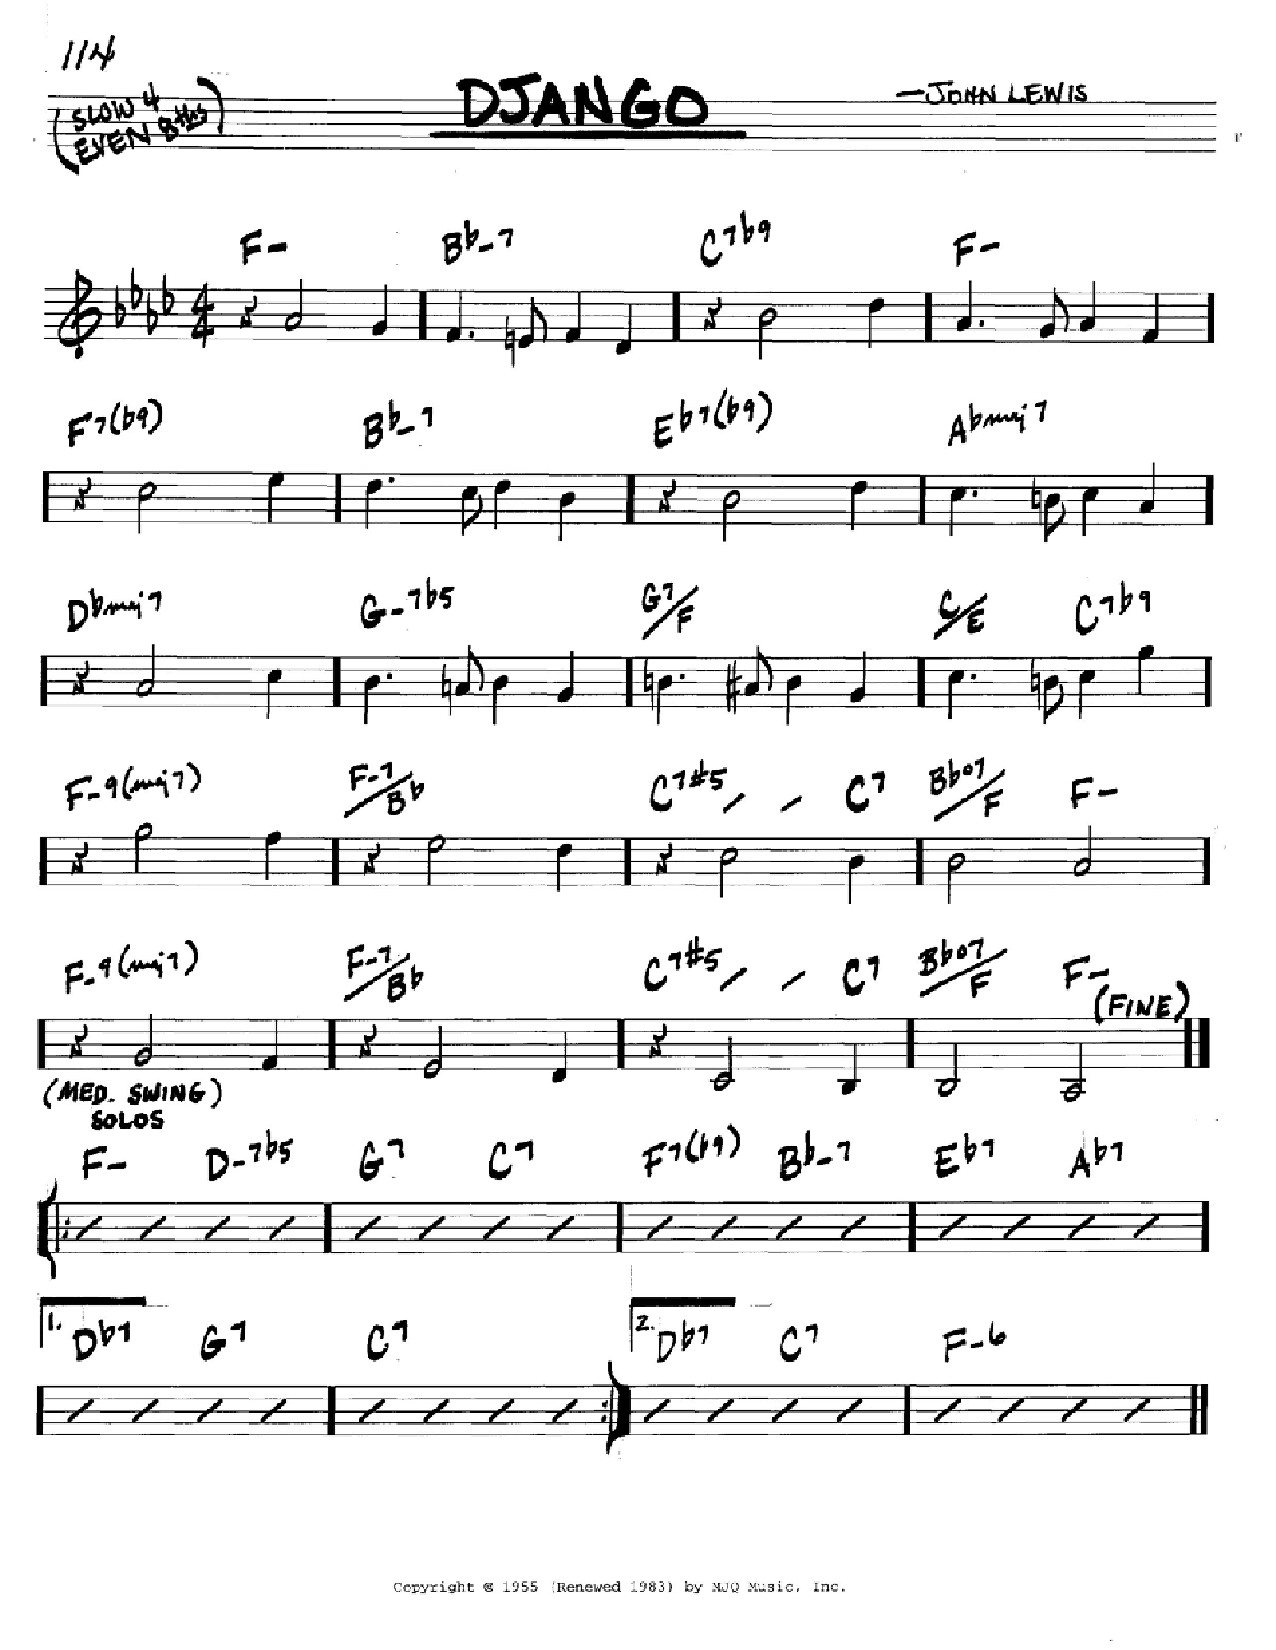 John Lewis Django Sheet Music Notes & Chords for Real Book – Melody & Chords – Eb Instruments - Download or Print PDF